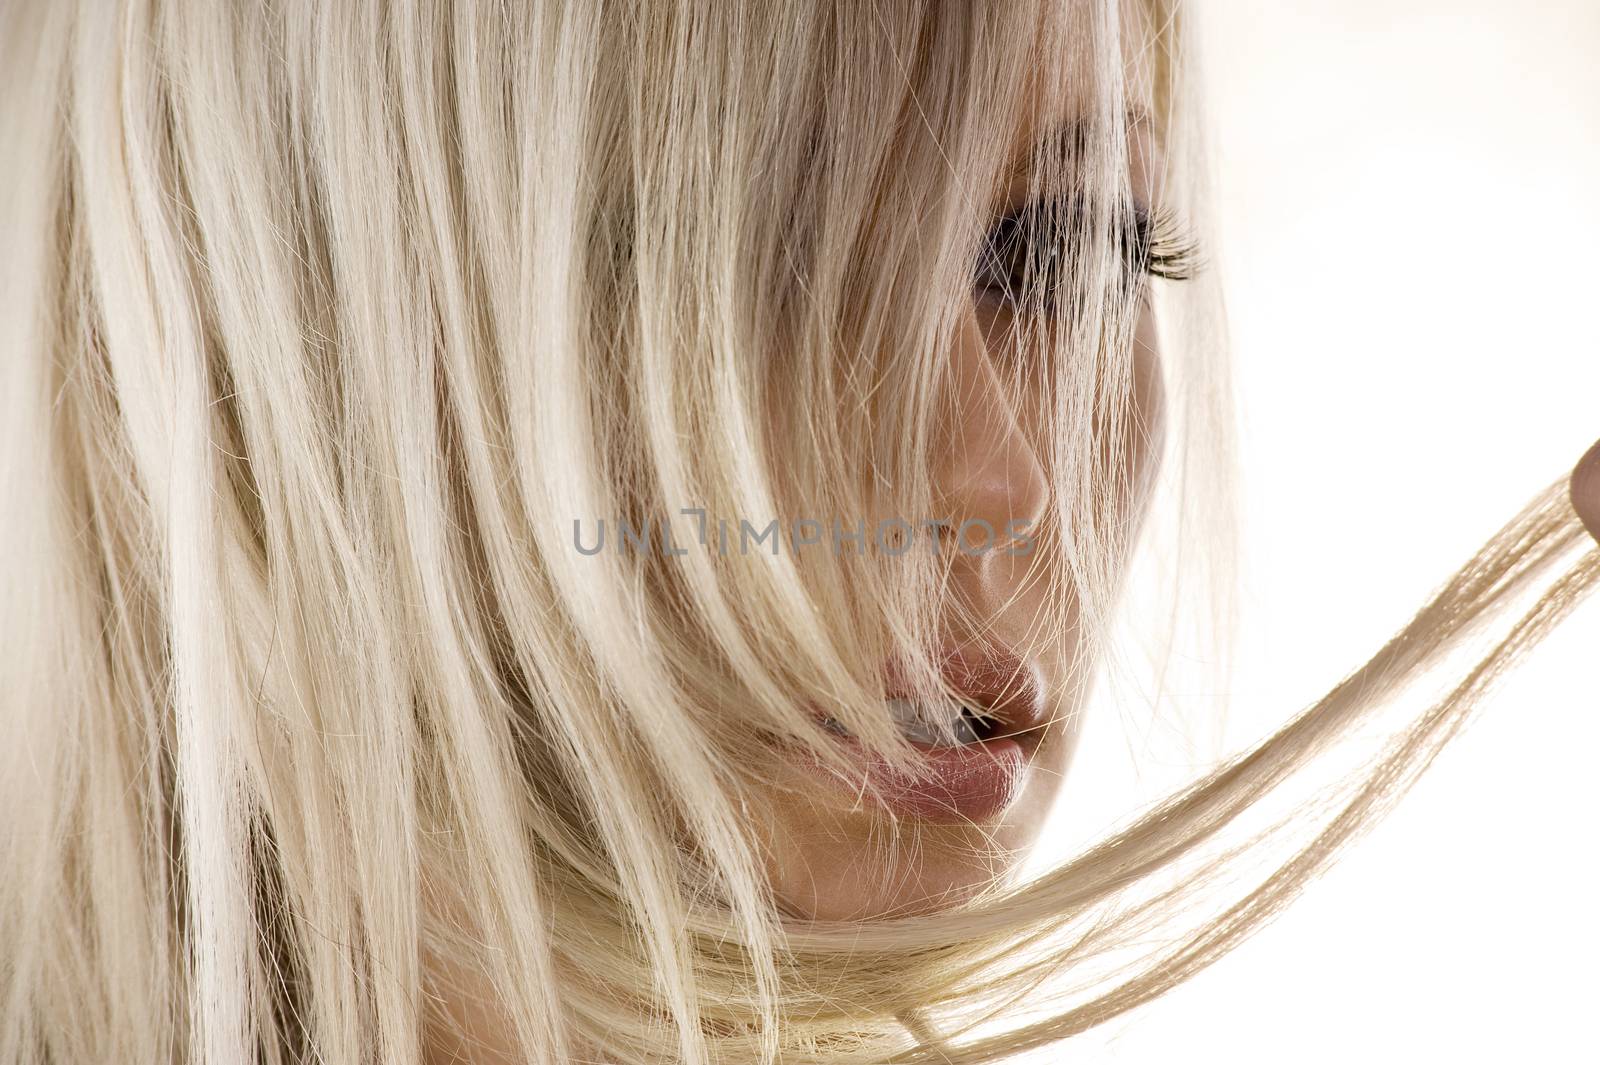 blond hair by fotoCD